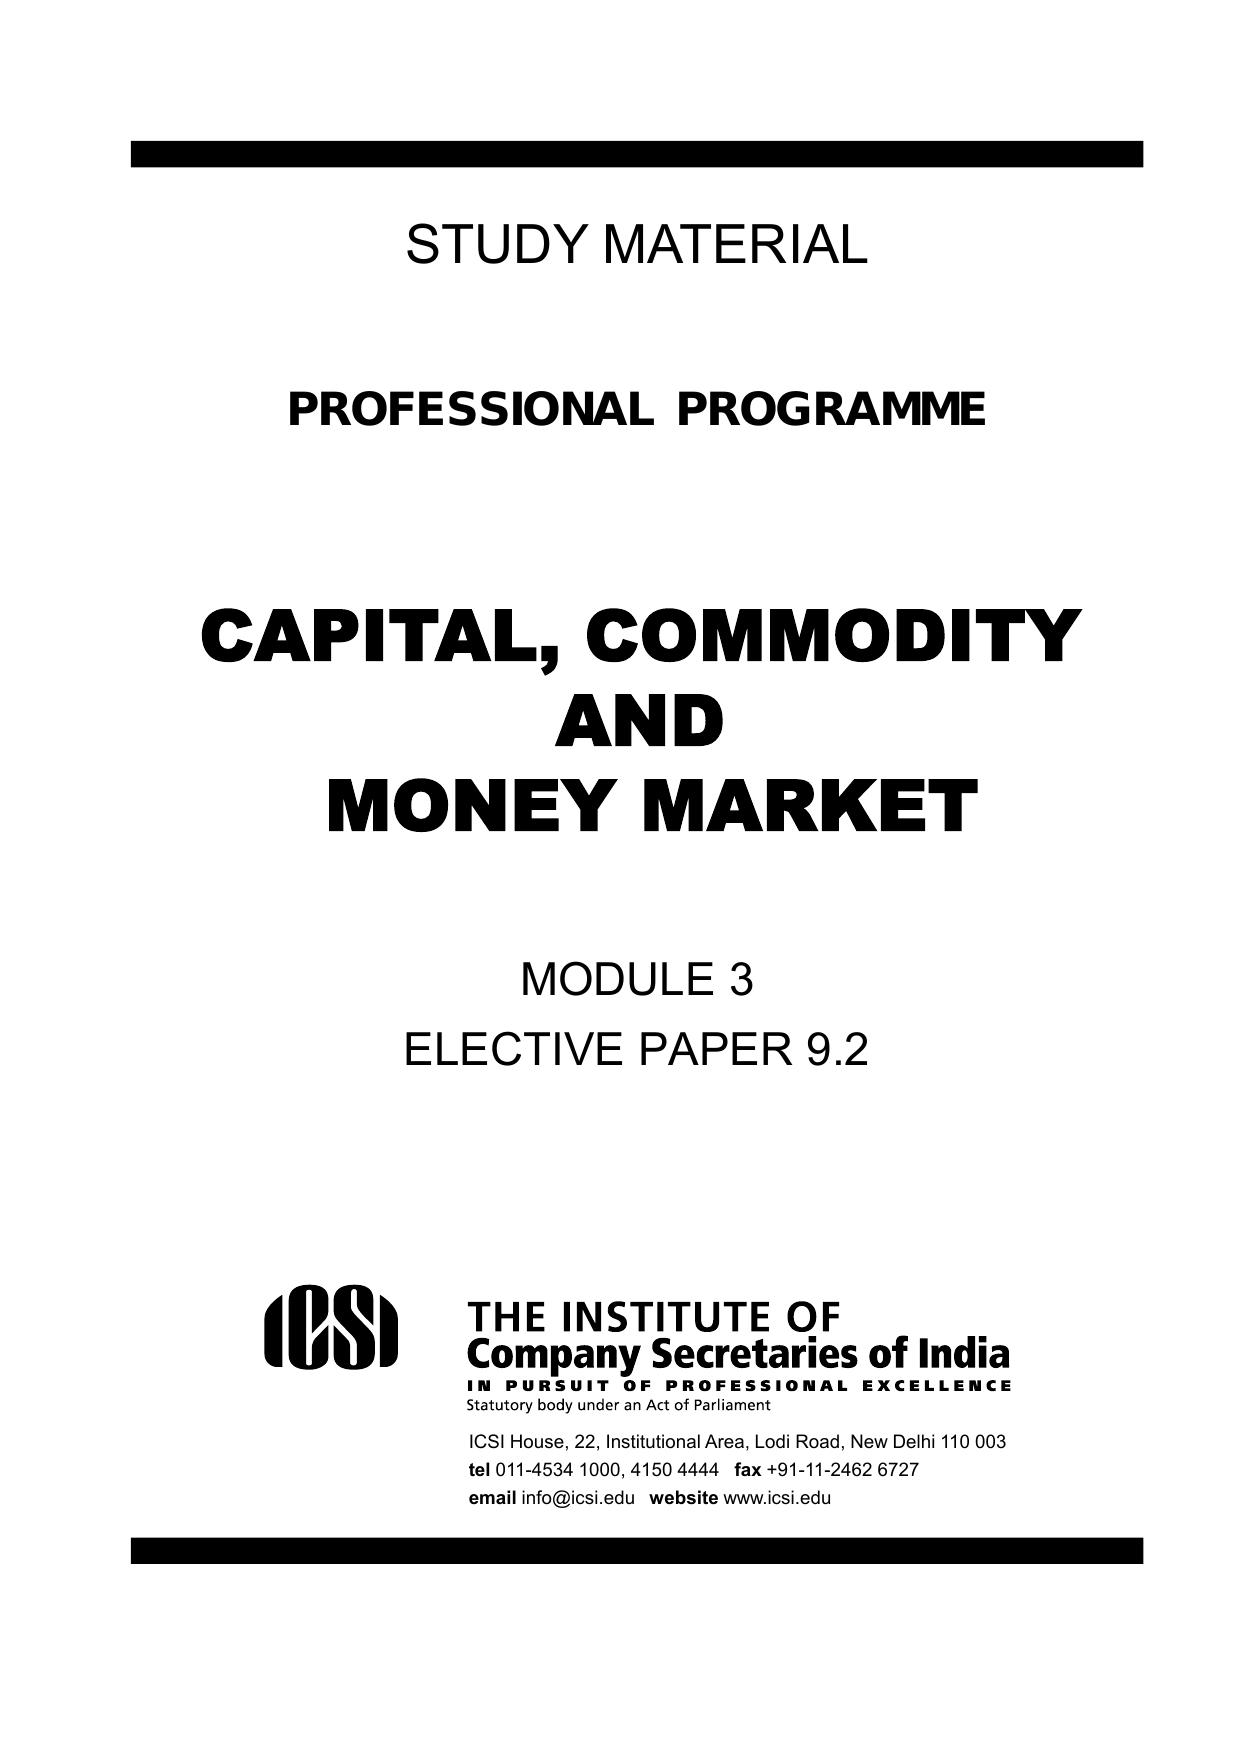 Capital, Commodity and Money Market